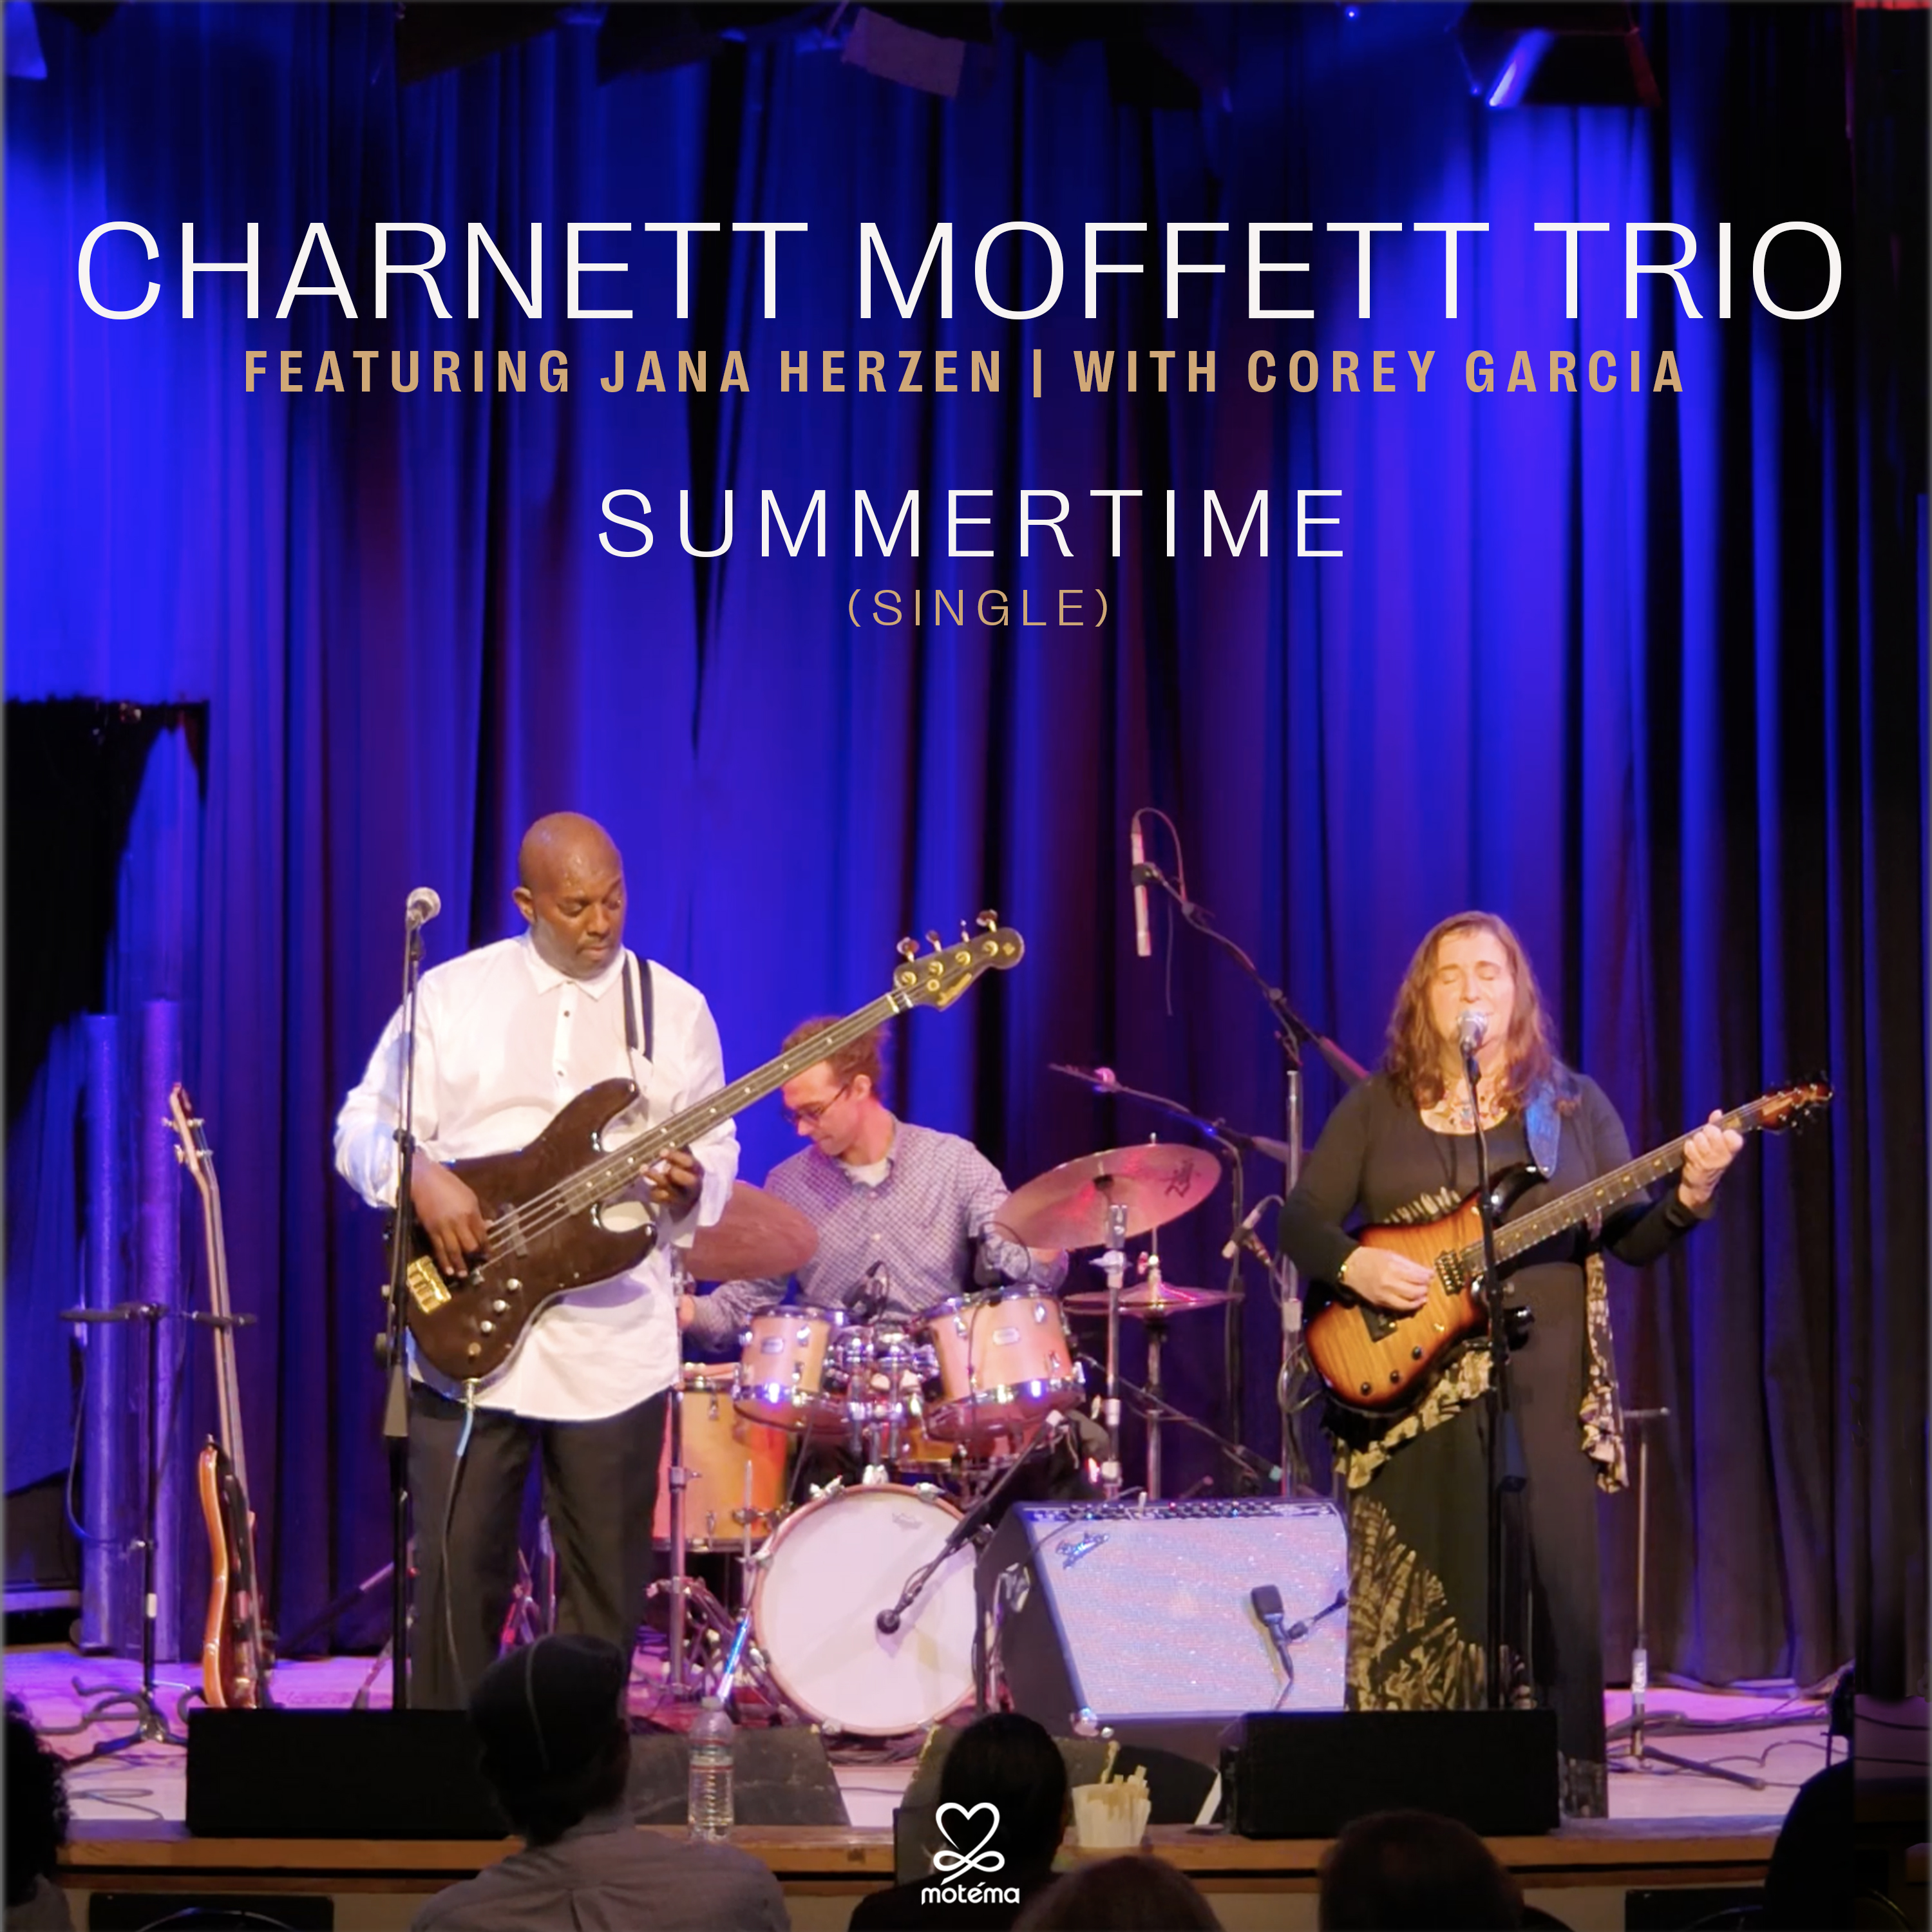 New Single “Summertime” from The Charnett Moffett Trio drops 9/22 honoring the last day of summer.